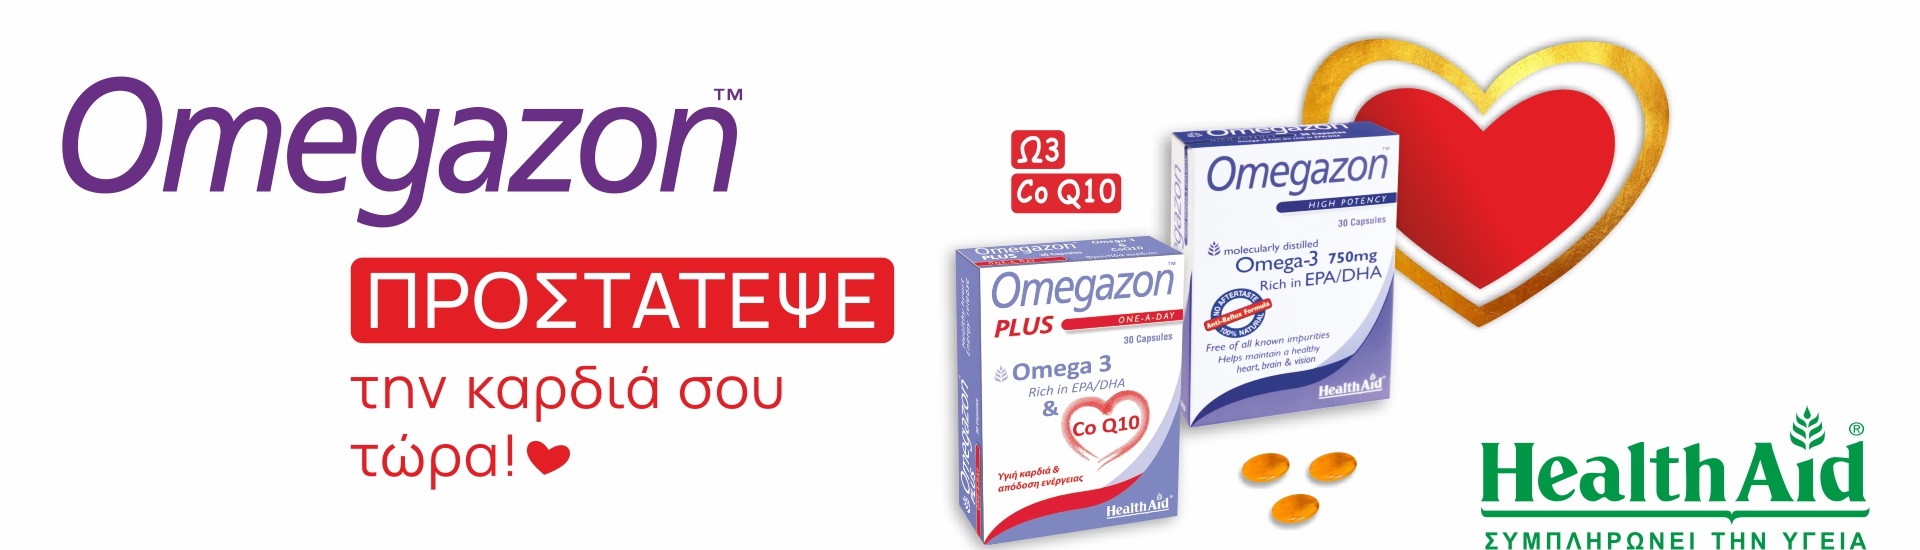 omegazon health aid